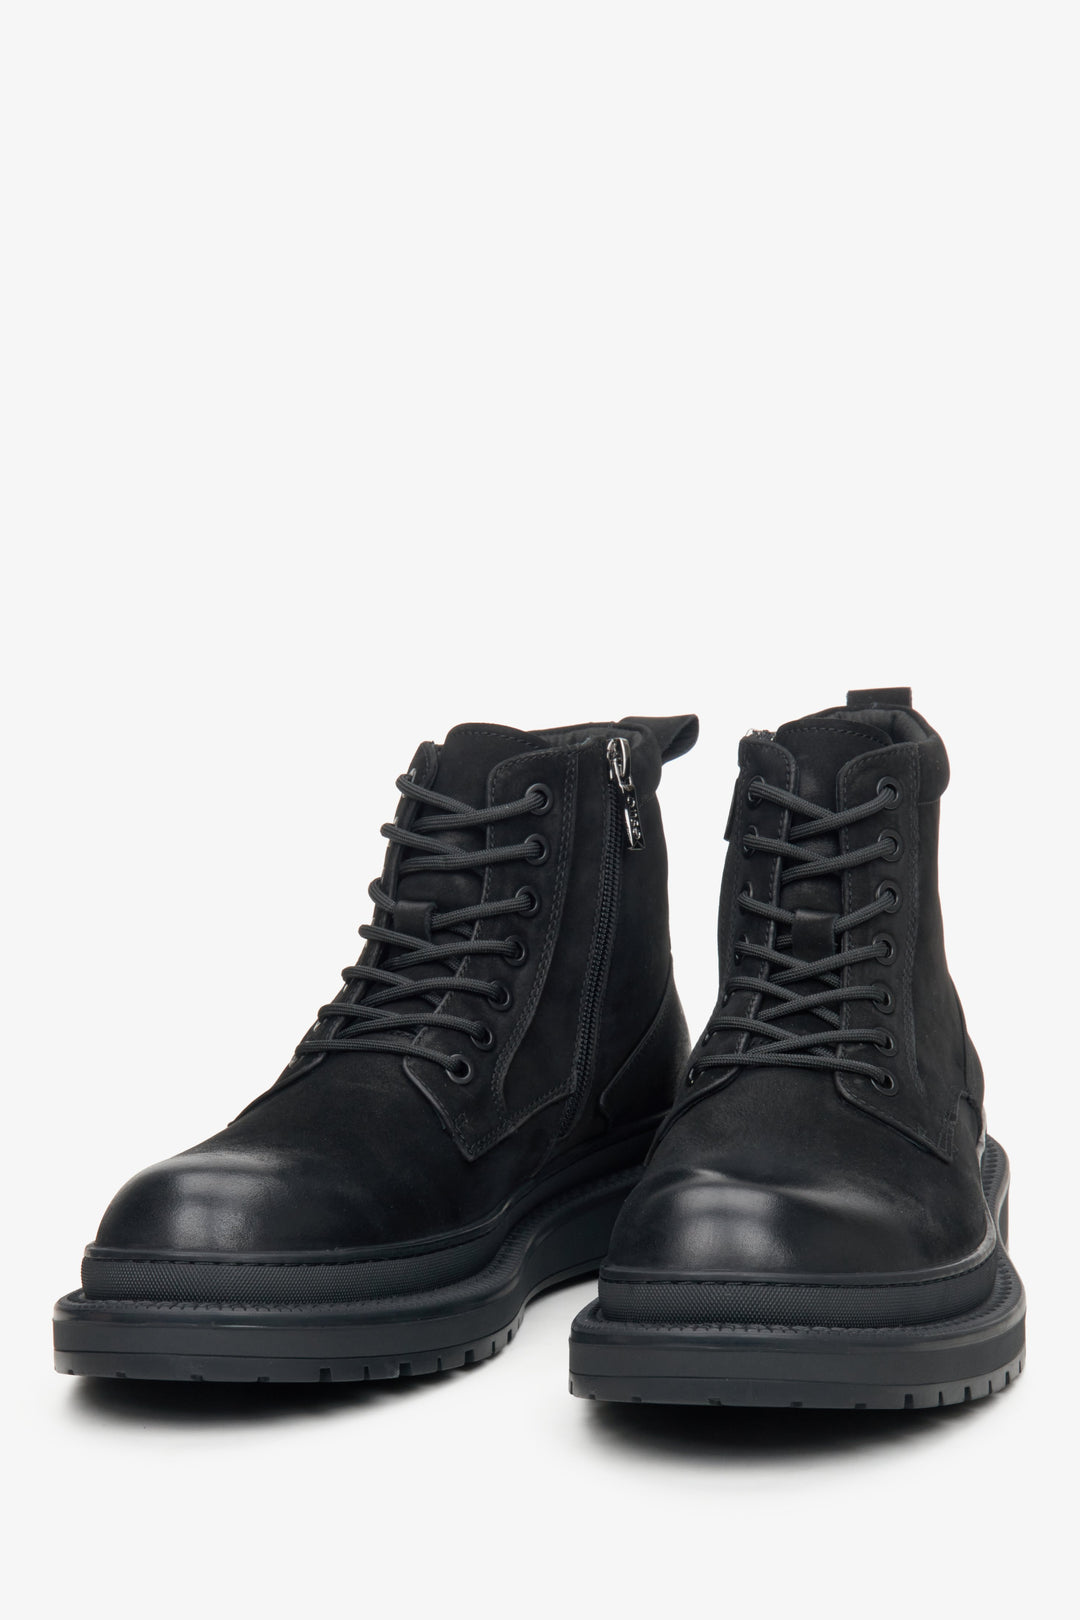 Men's warm black boots by Estro made of genuine nubuck.